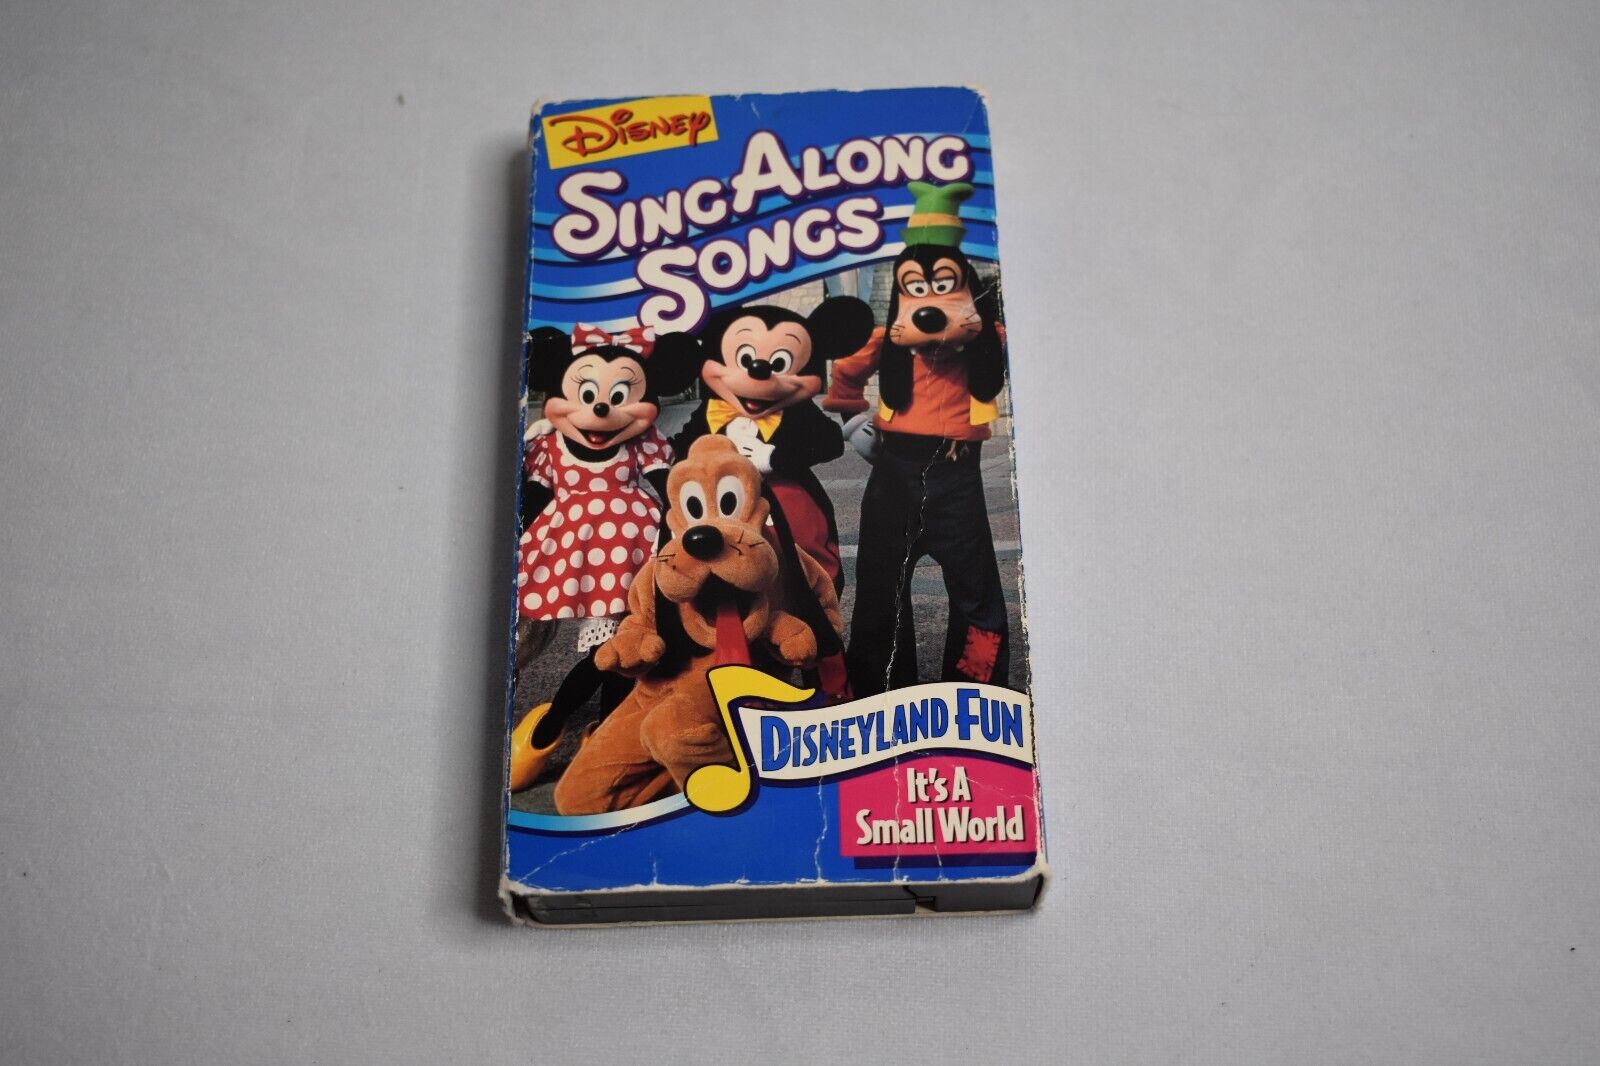 Disney Sing Along Songs VHS Tape Disneyland Fun It’s A Small World